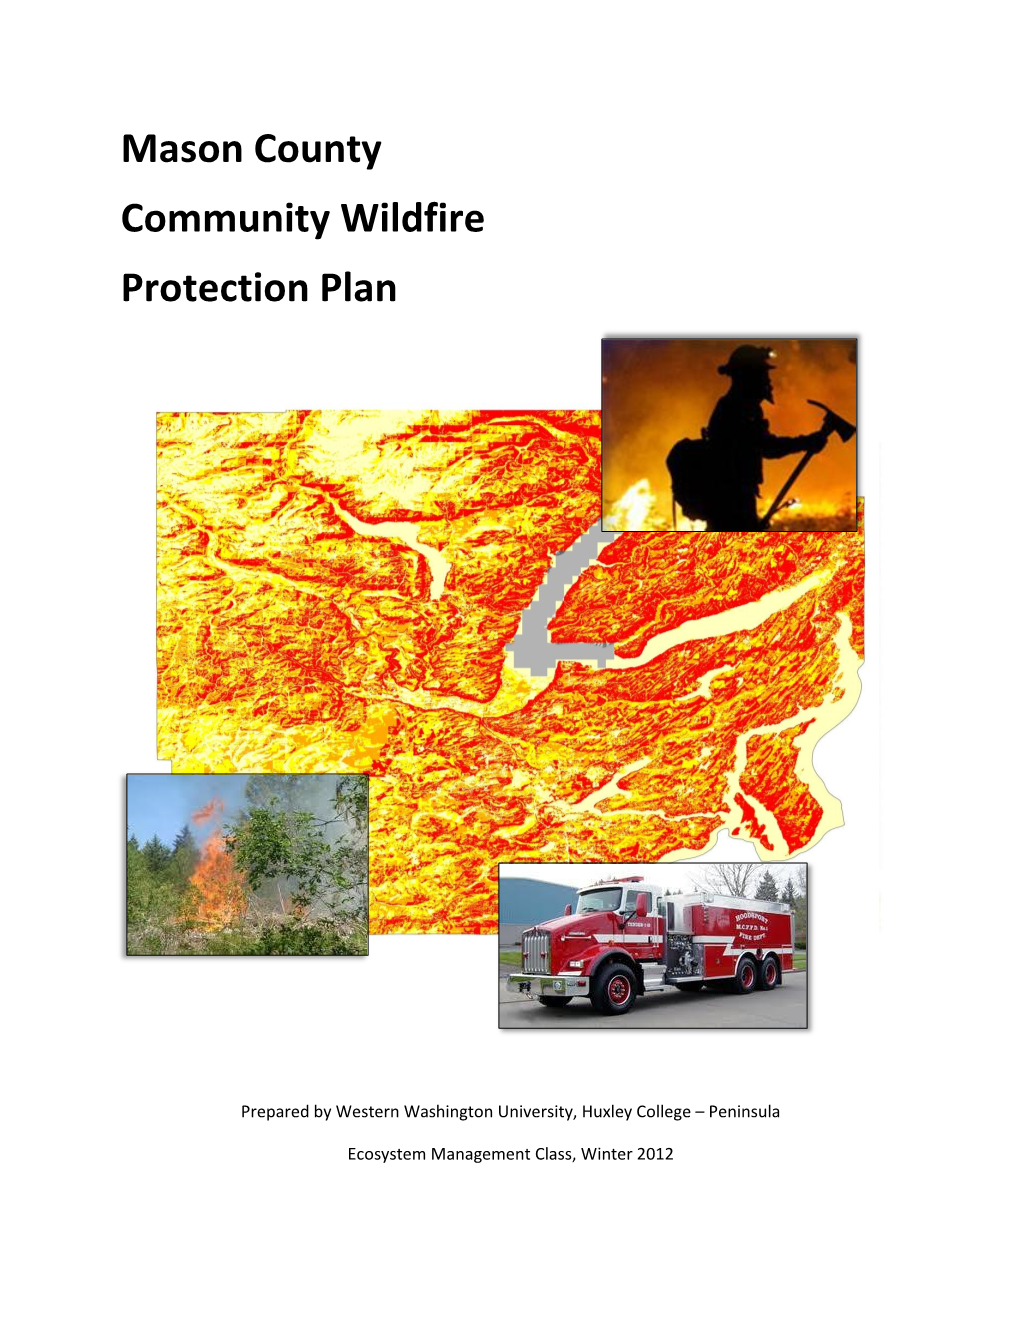 Mason County Community Wildfire Protection Plan